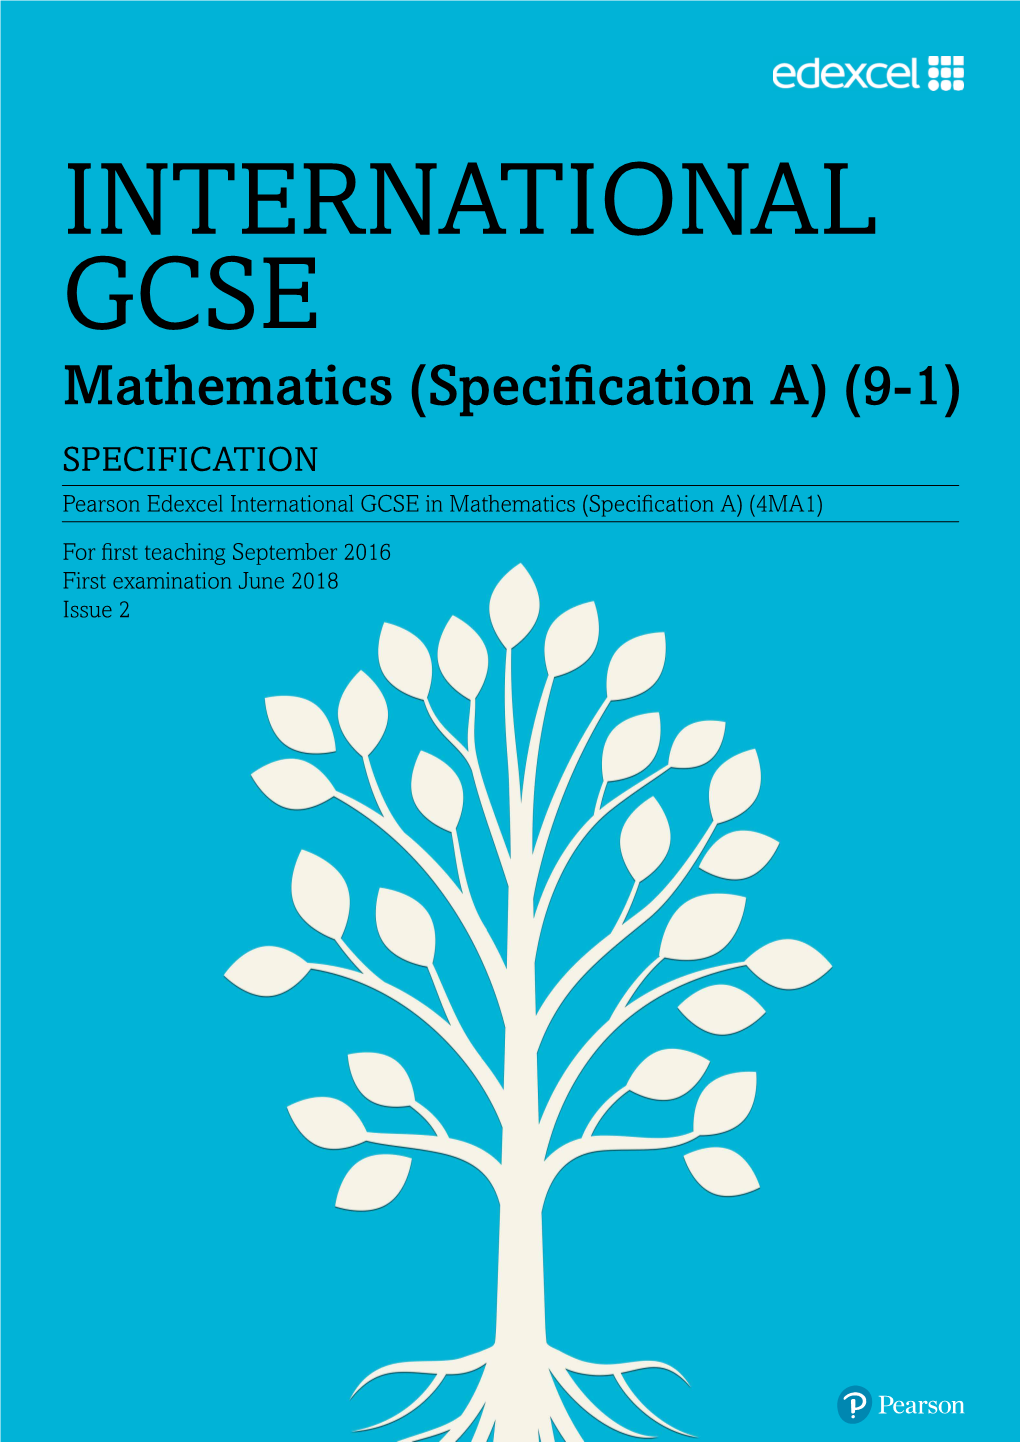 Pearson Edexcel International GCSE in Mathematics Specification